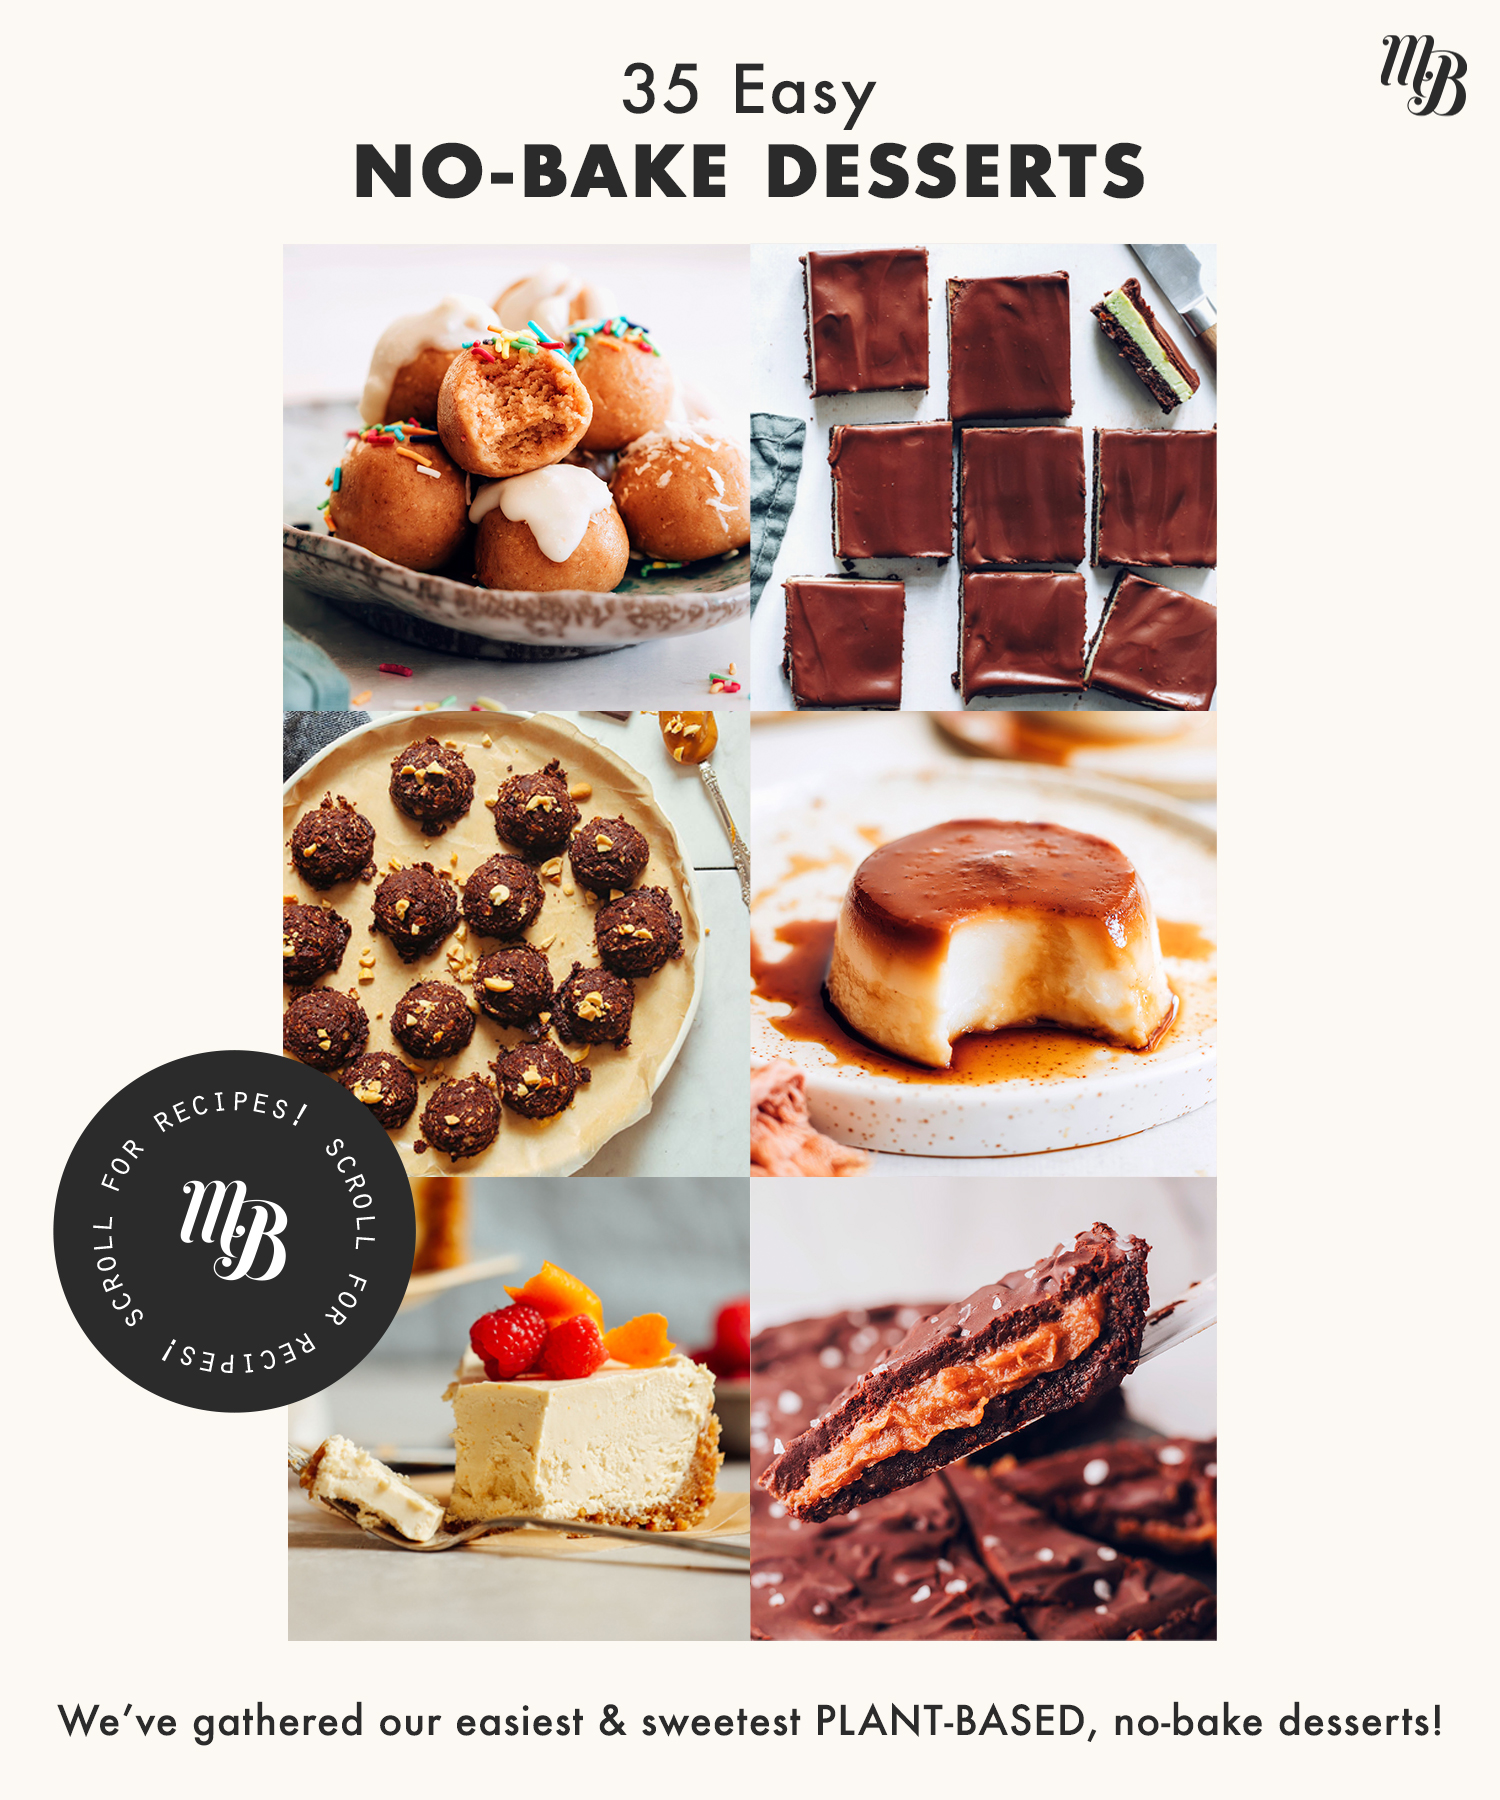 Assortment of easy no-bake vegan desserts